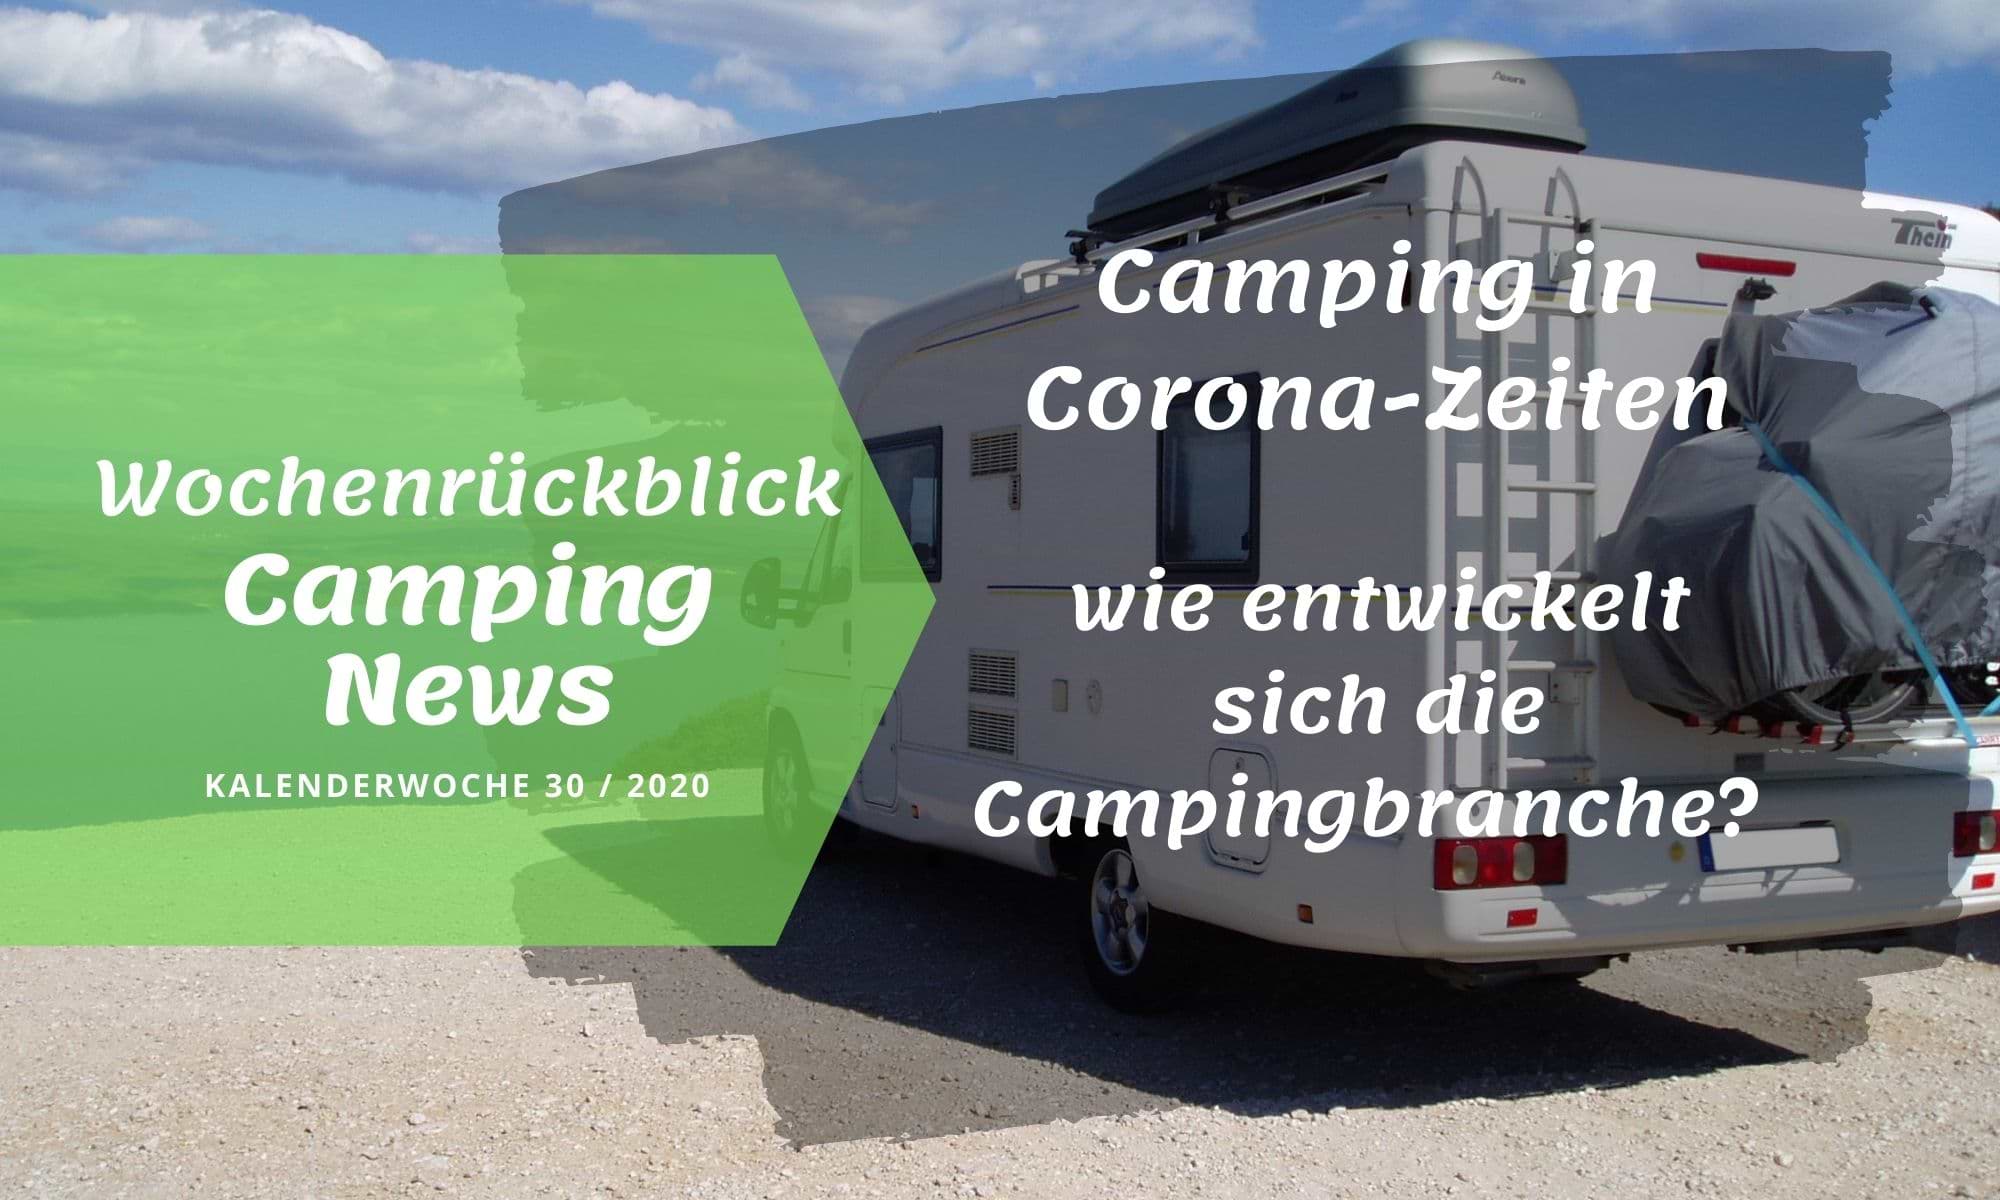 Wochenrückblick Camping News KW30-2020 Camping und Corona